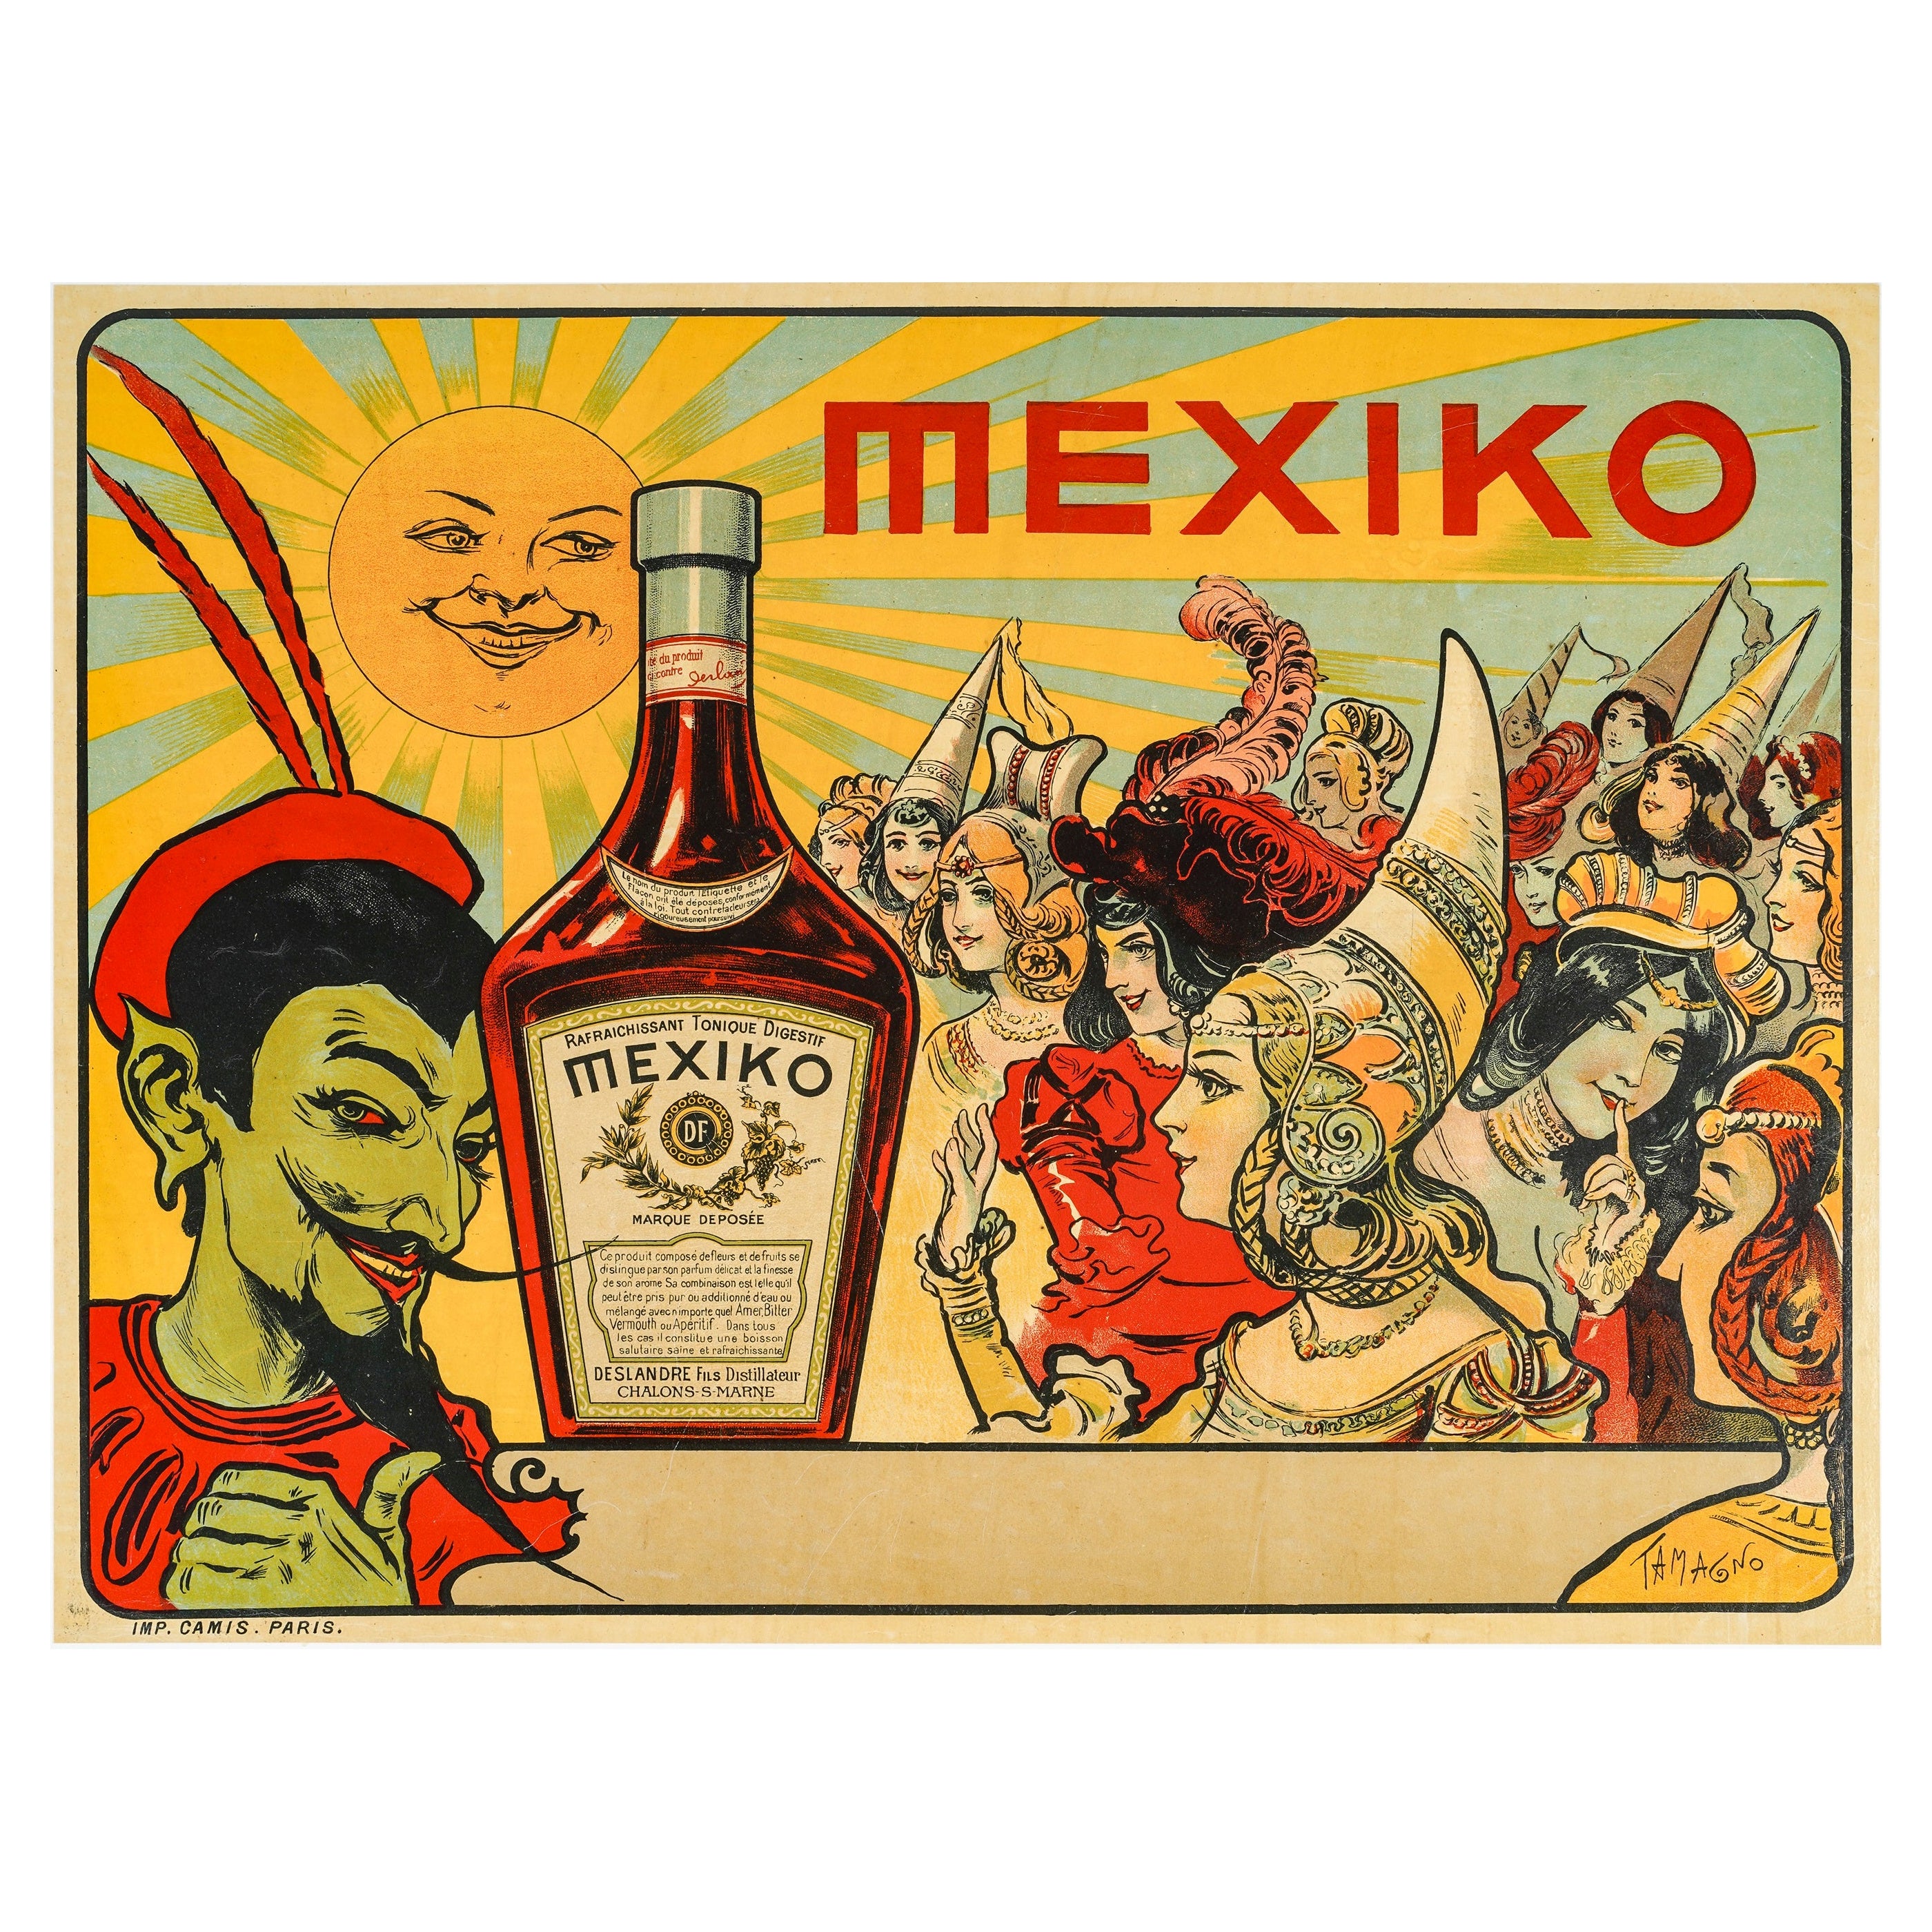 Tamagno, Original-Vintage-Poster, Mexiko-Alkohol, Dämon, Sonne, Mittelalter, 1900